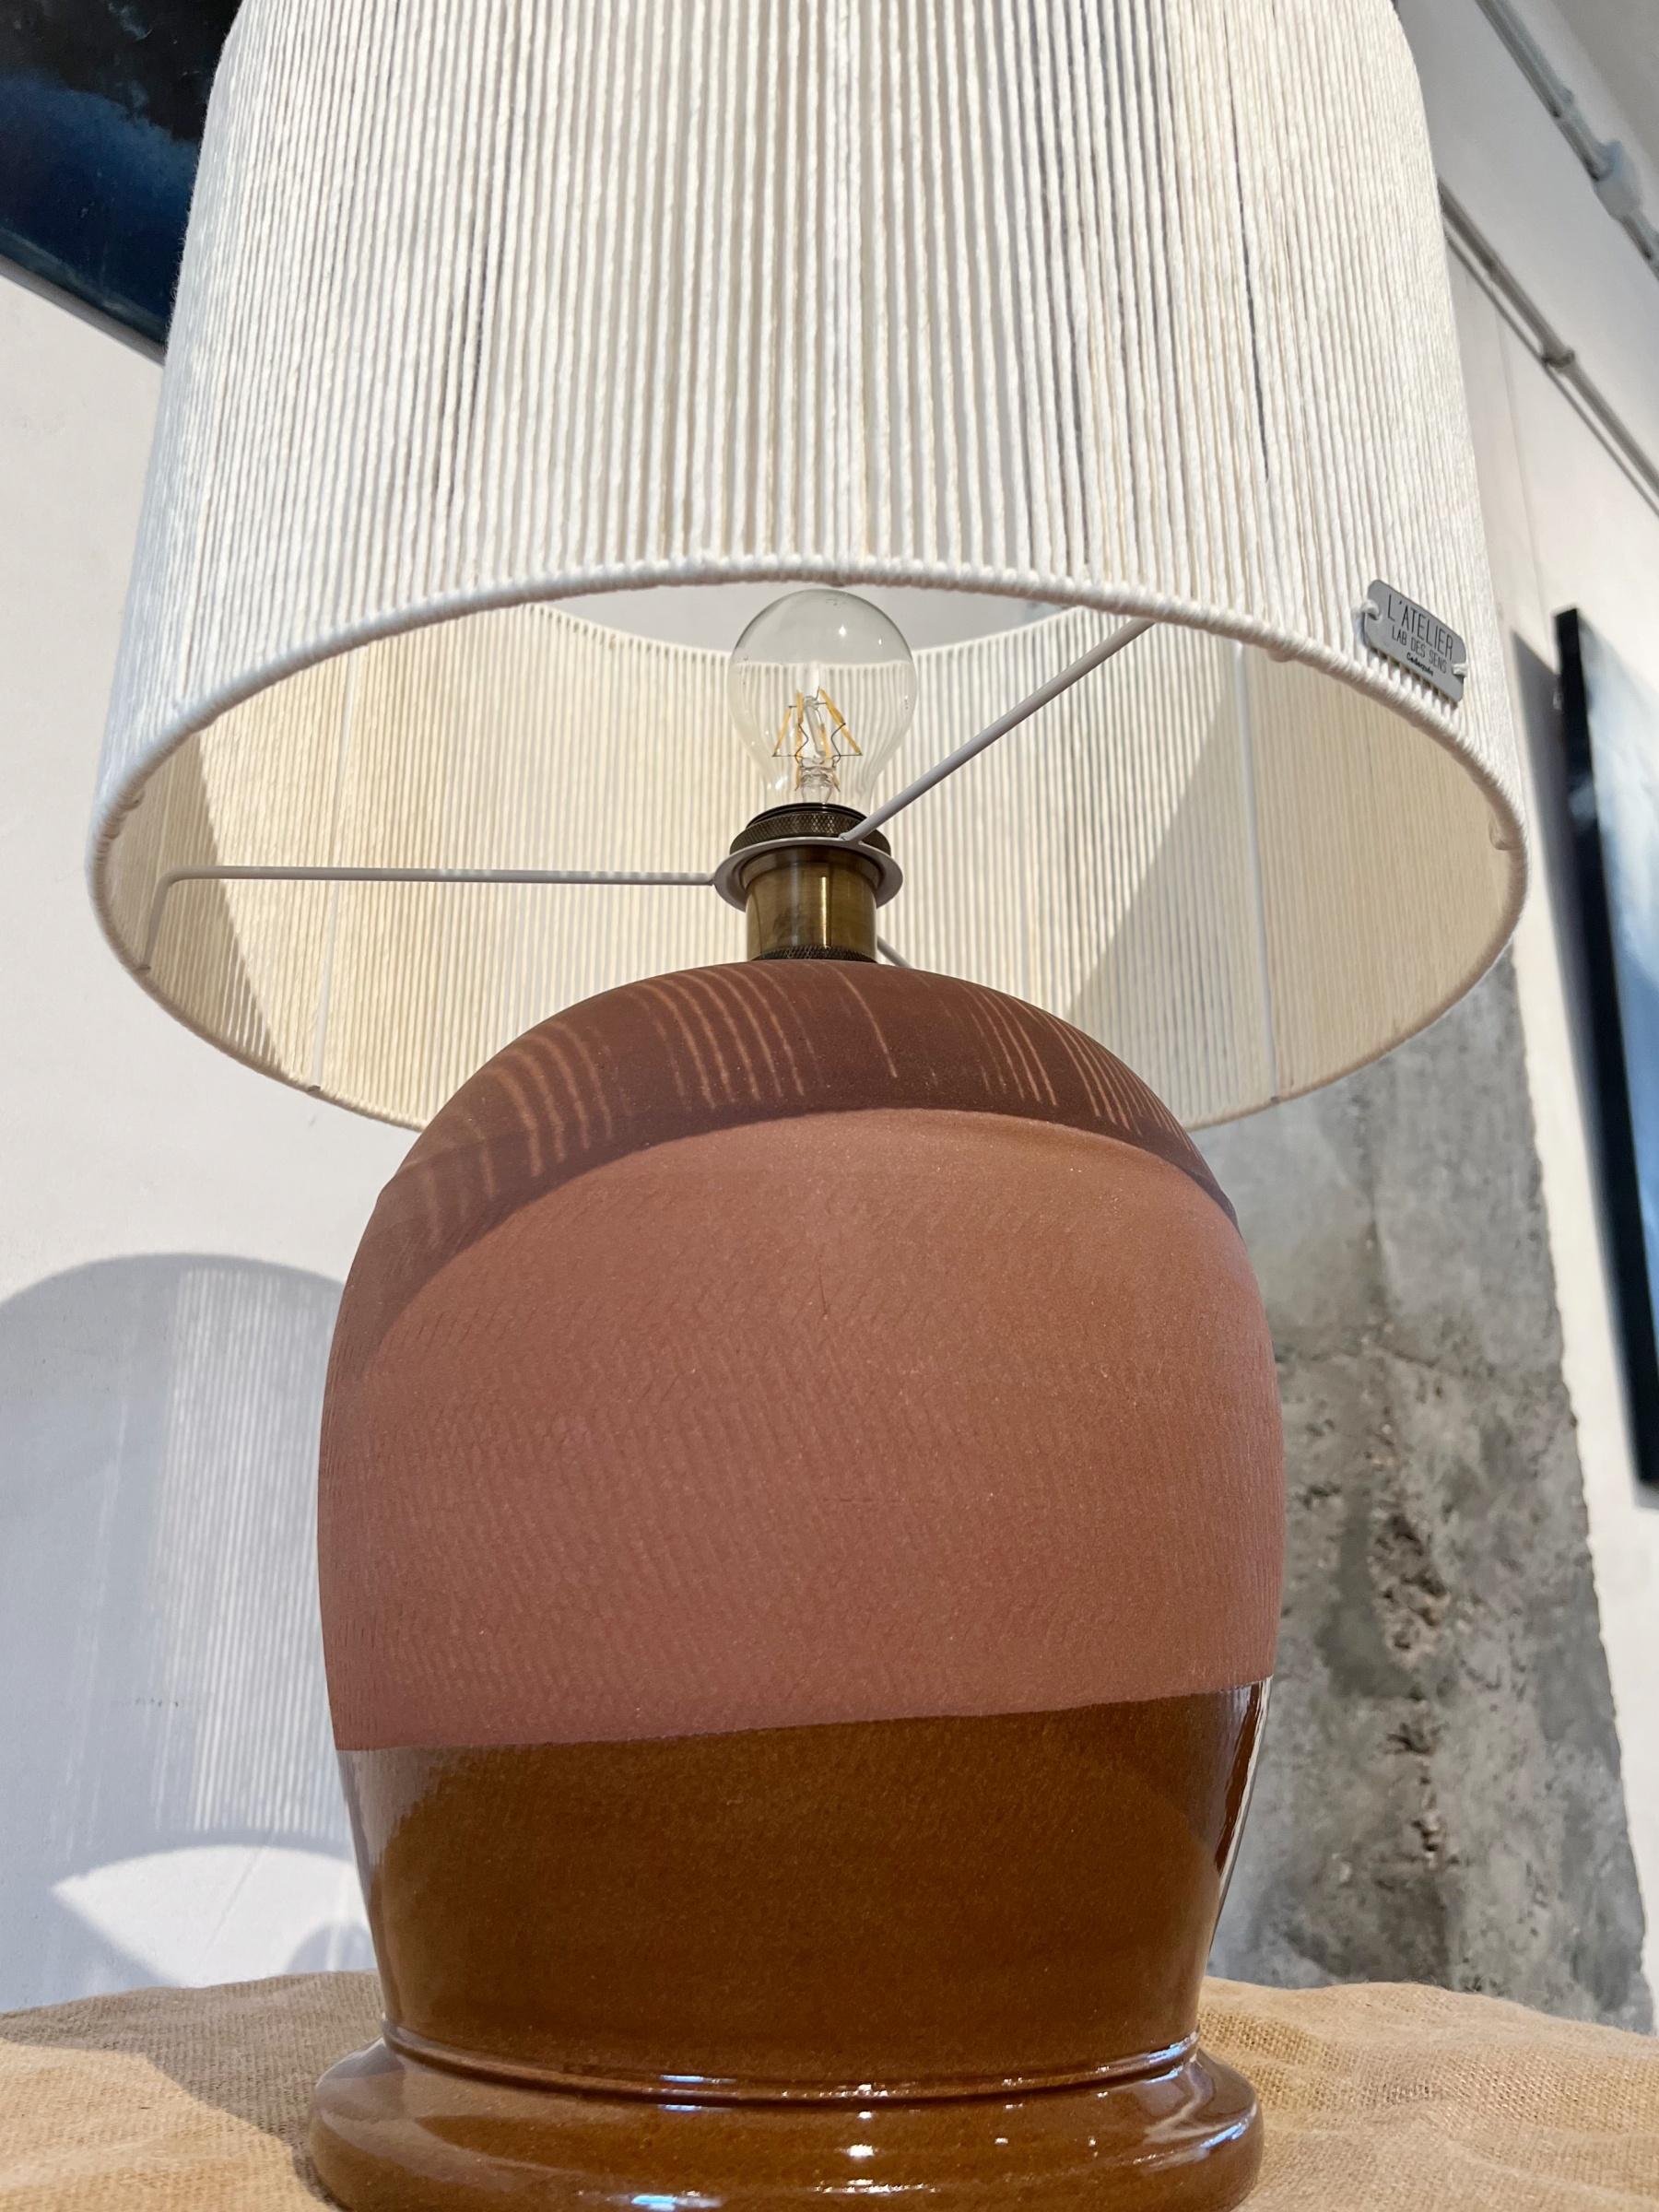 Glazed Contemporary Manolo Eirin Handmade Table Side Lamp Ceramic Terracotta Color For Sale